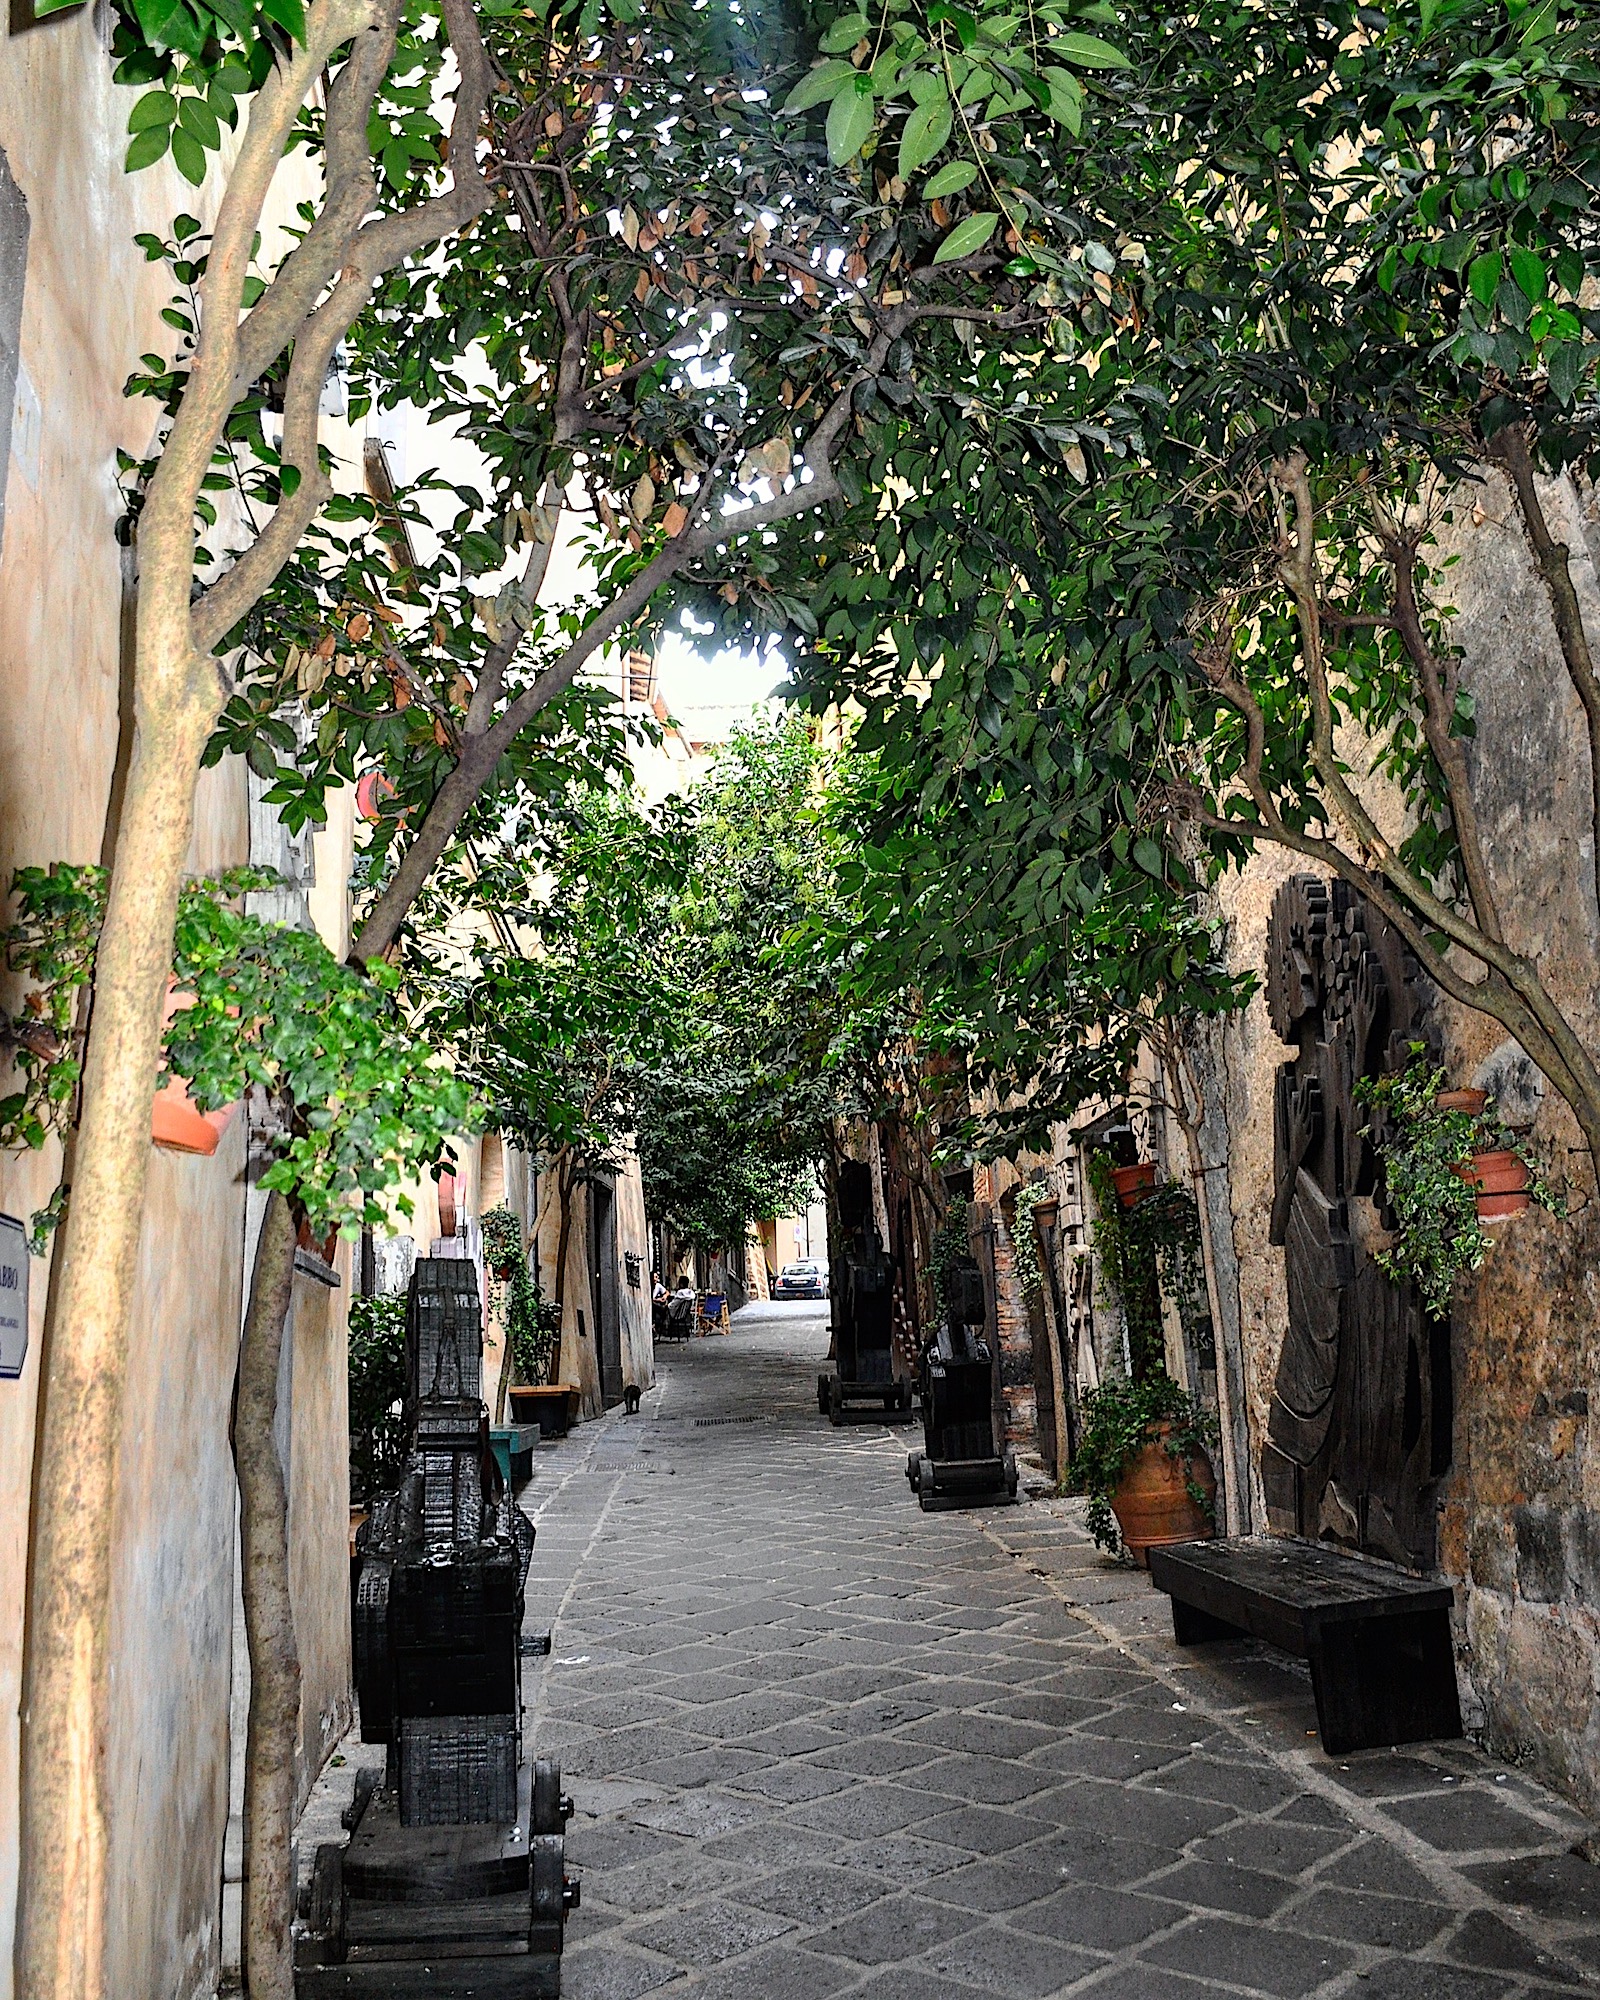 Street Scene of the artistic Orvieto, Italy